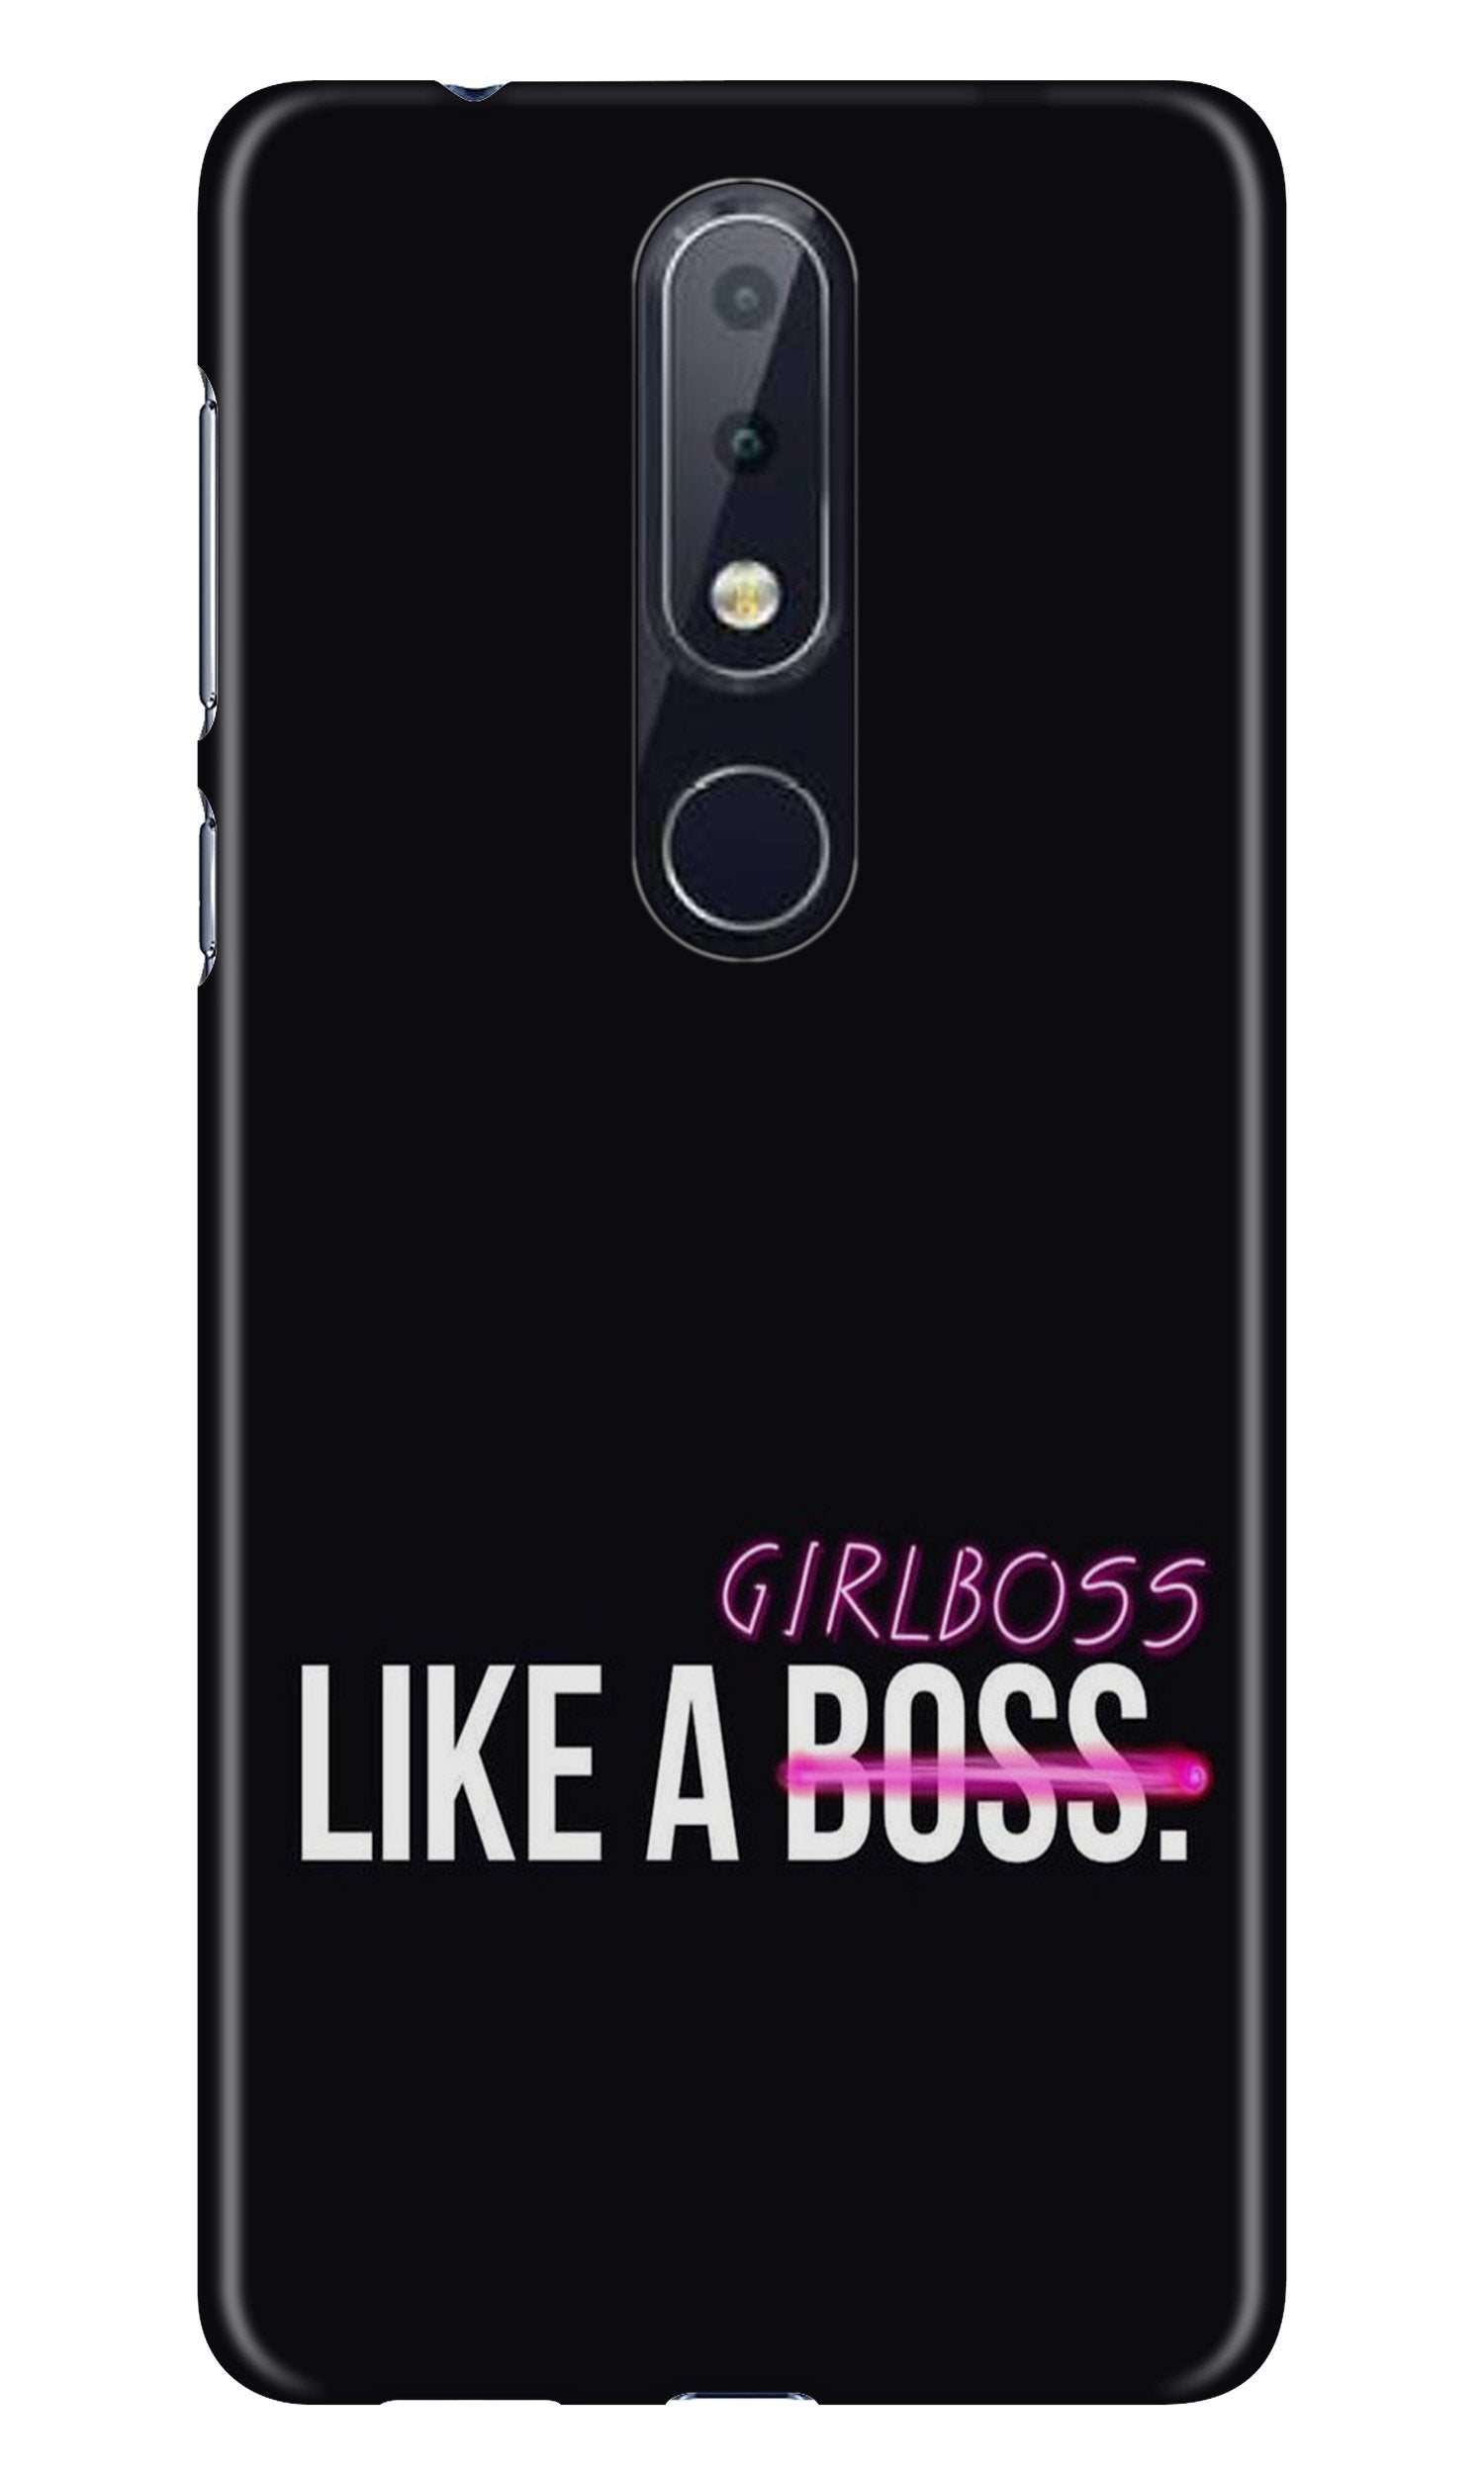 Like a Girl Boss Case for Nokia 7.1 (Design No. 265)